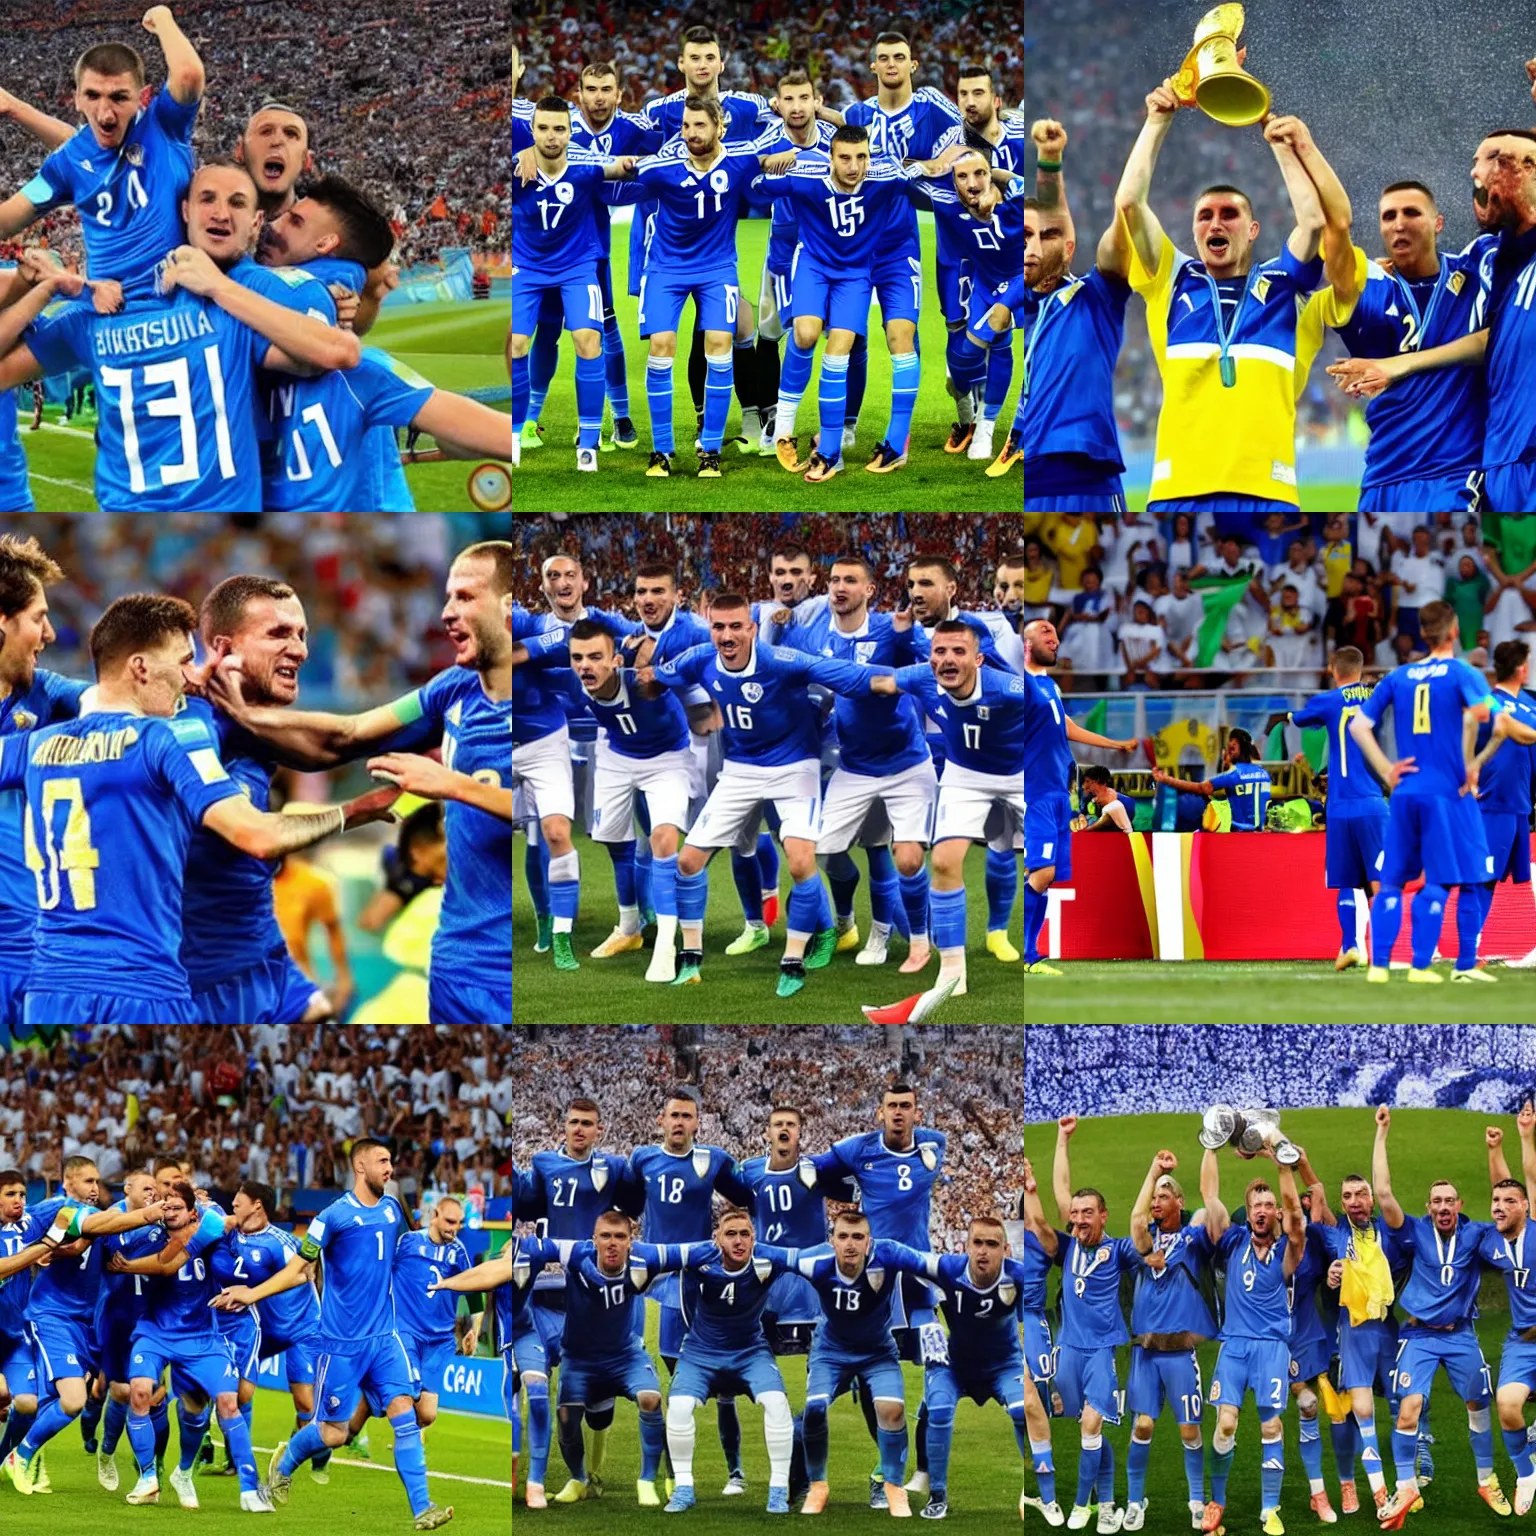 Prompt: bosnia herzegovina winning the world cup, high quality